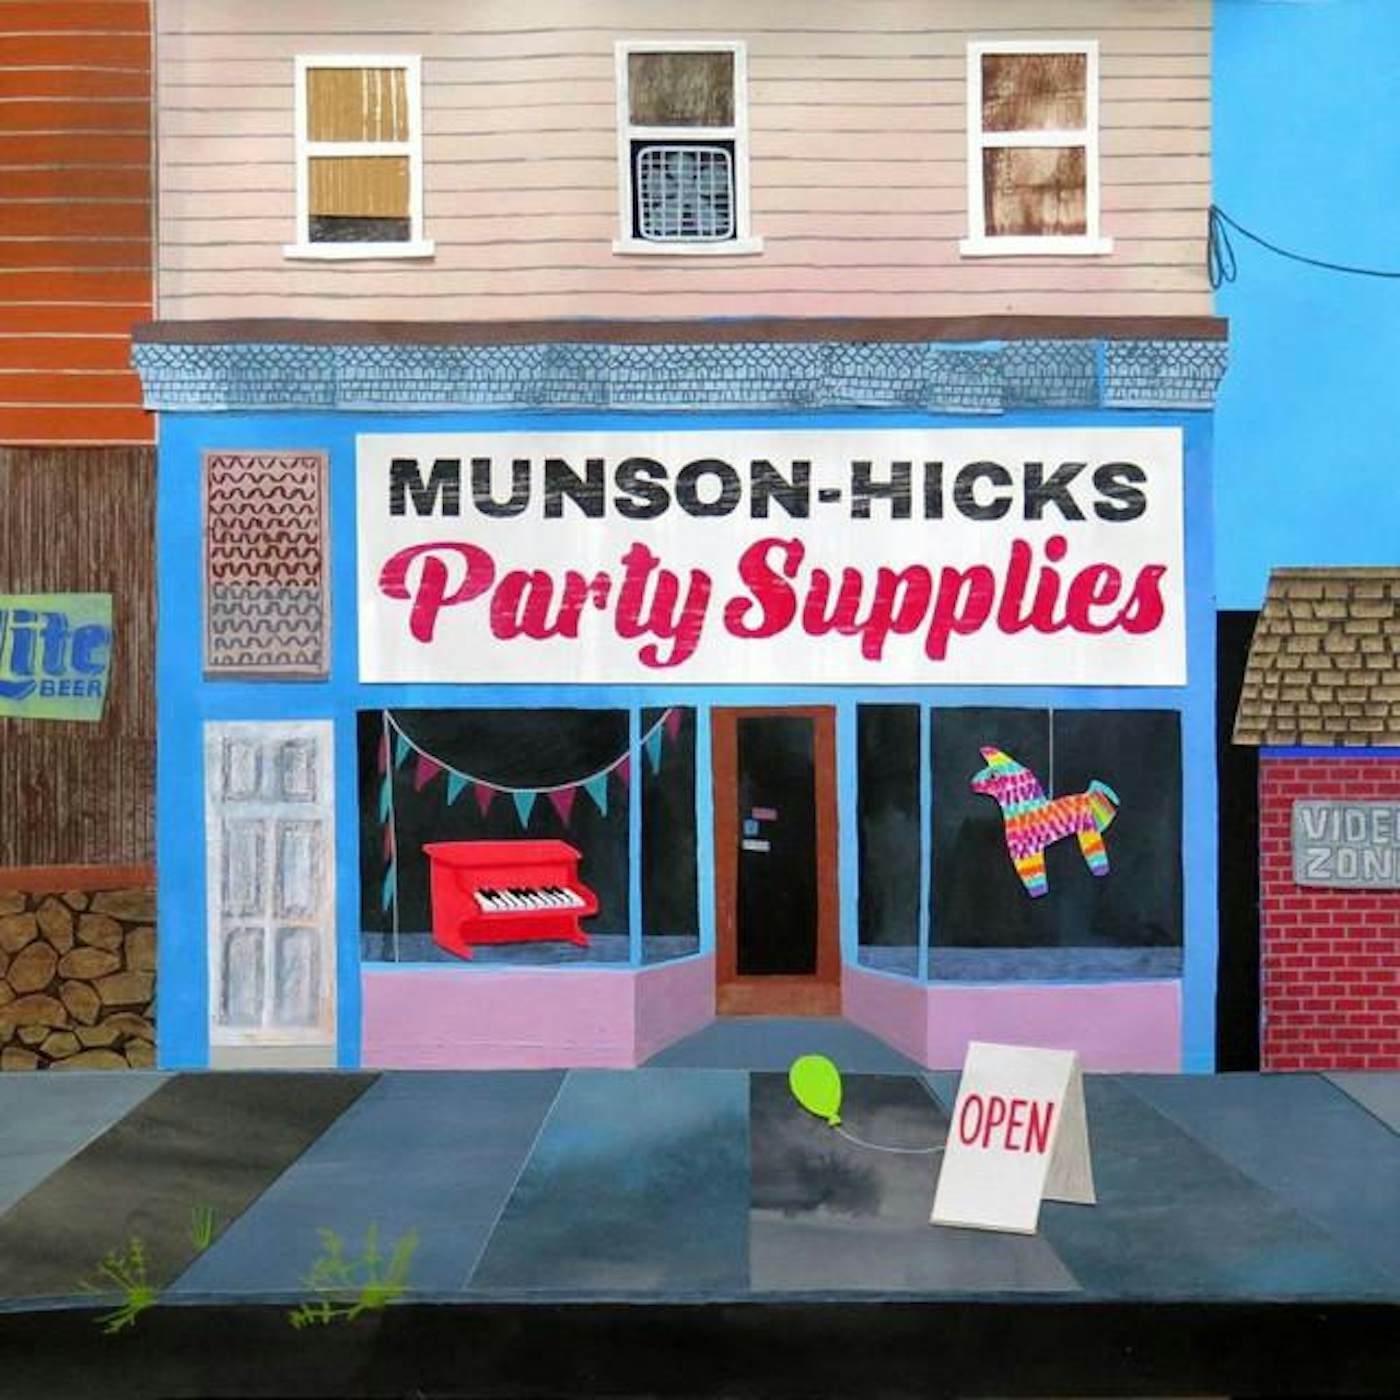 Munson-Hicks Party Supplies